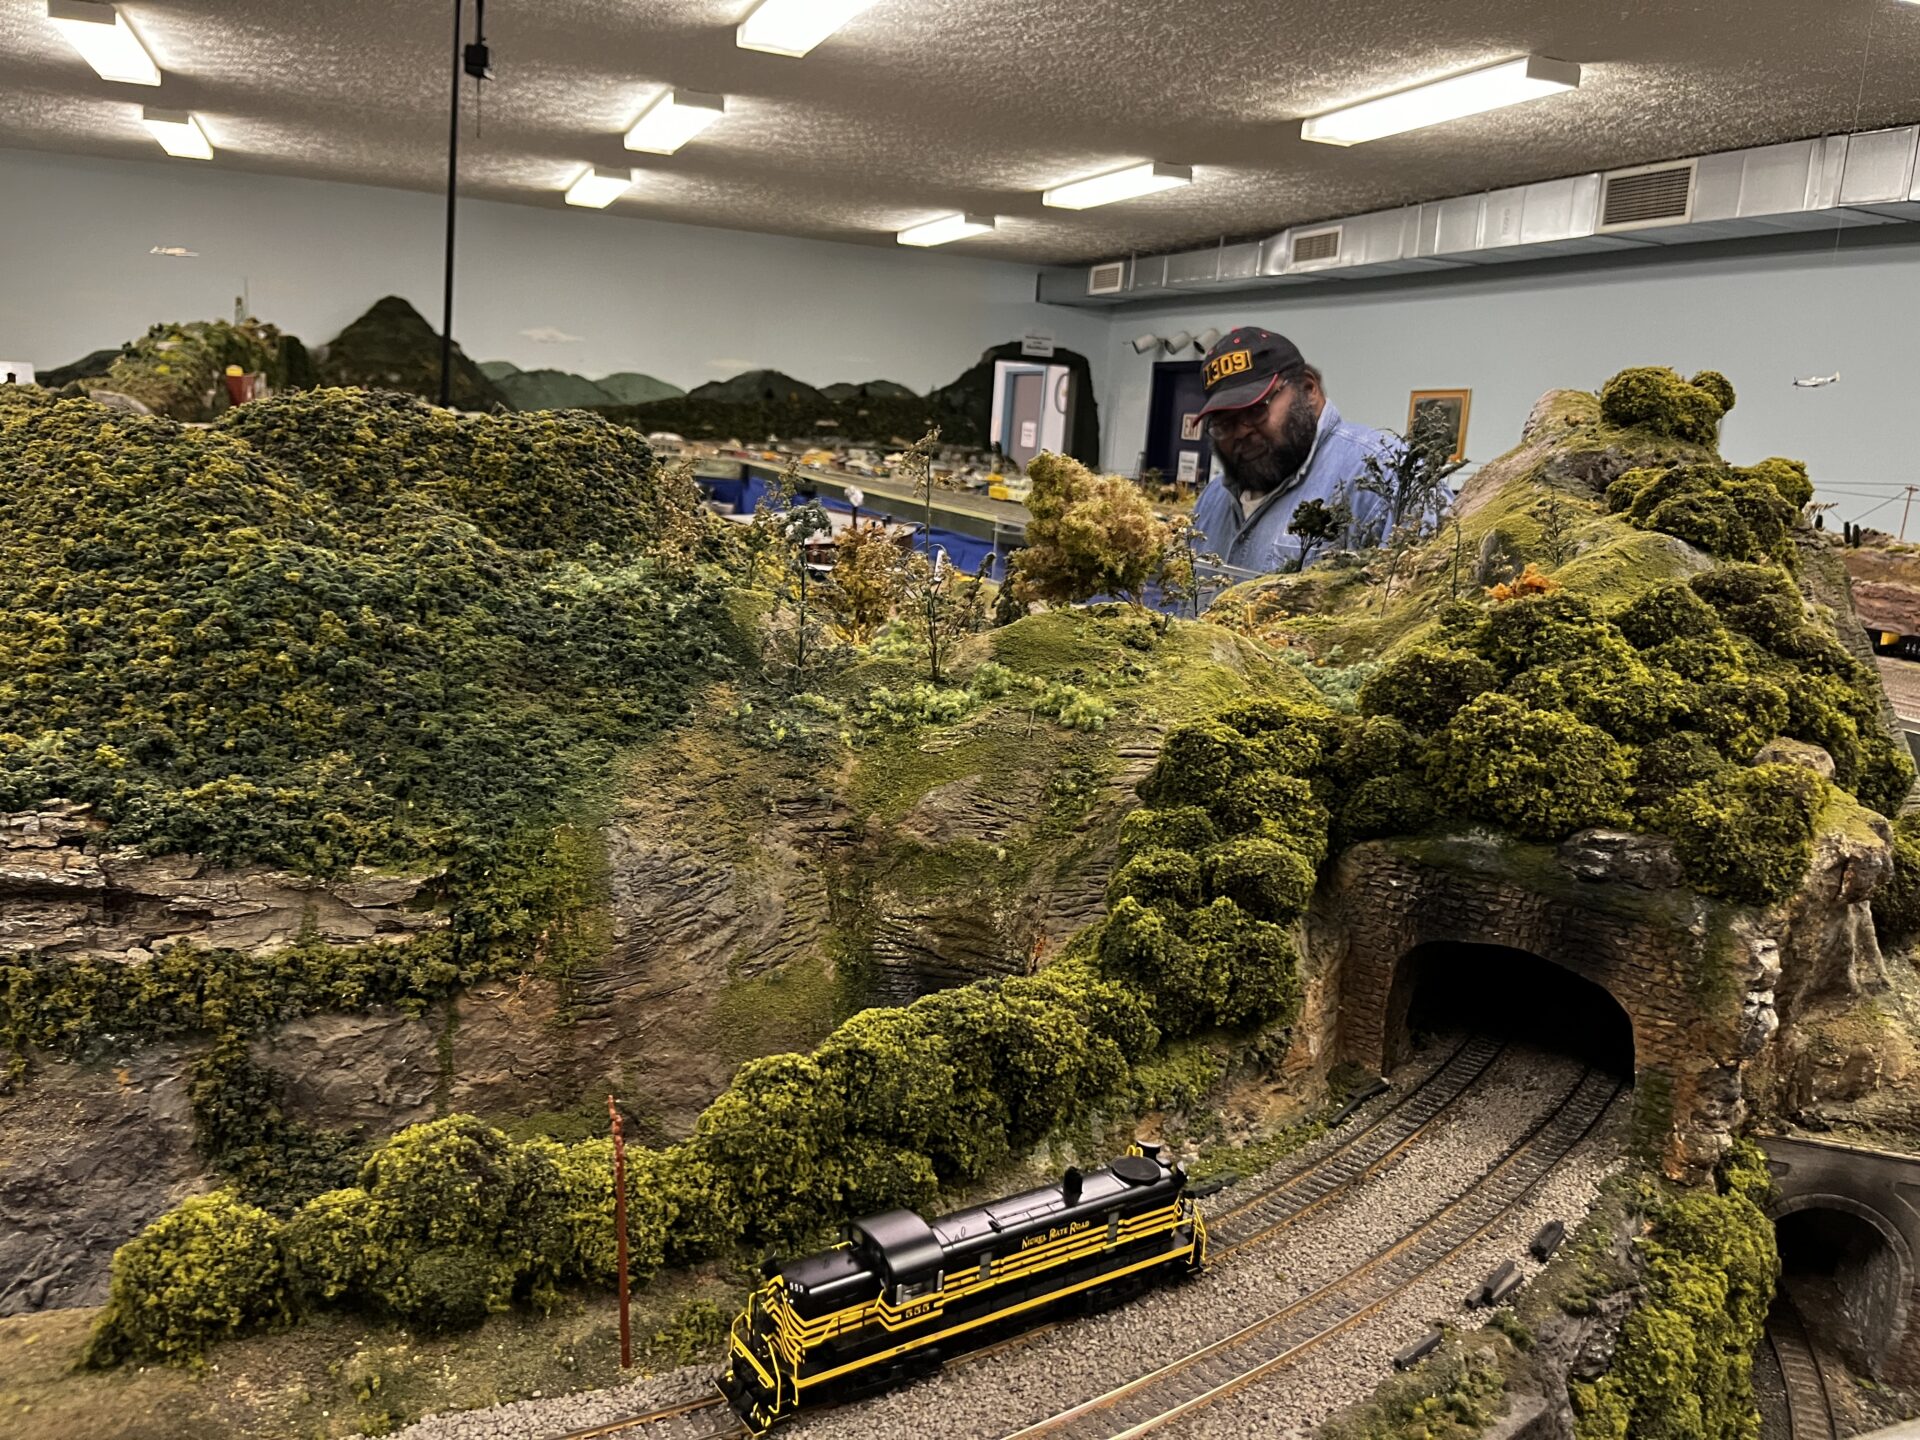 Model Railroad Planning 2024